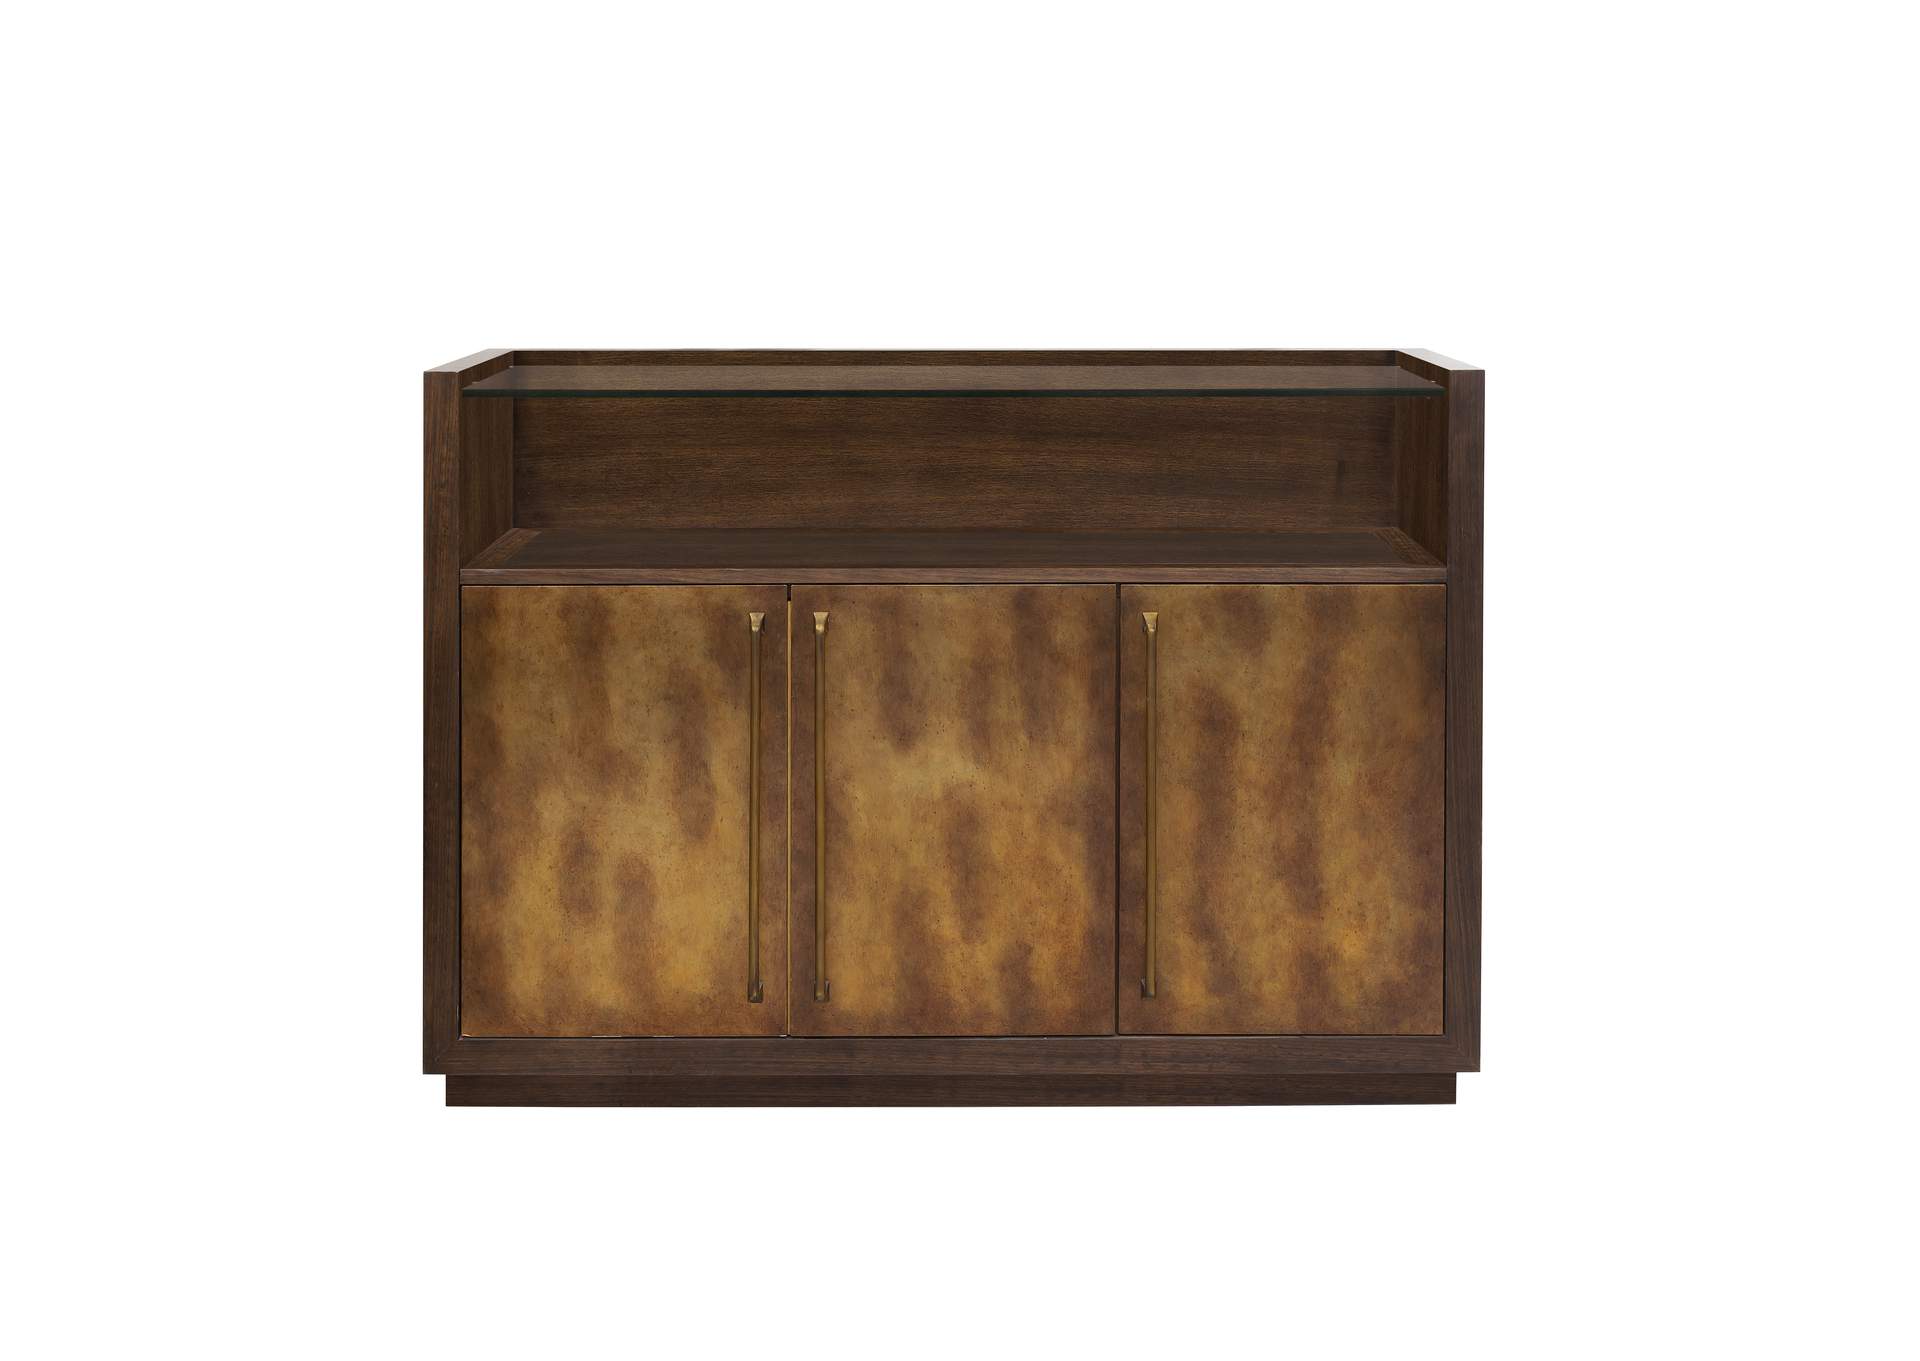 3 Door Bar Cabinet with Glass Shelves,Pulaski Furniture